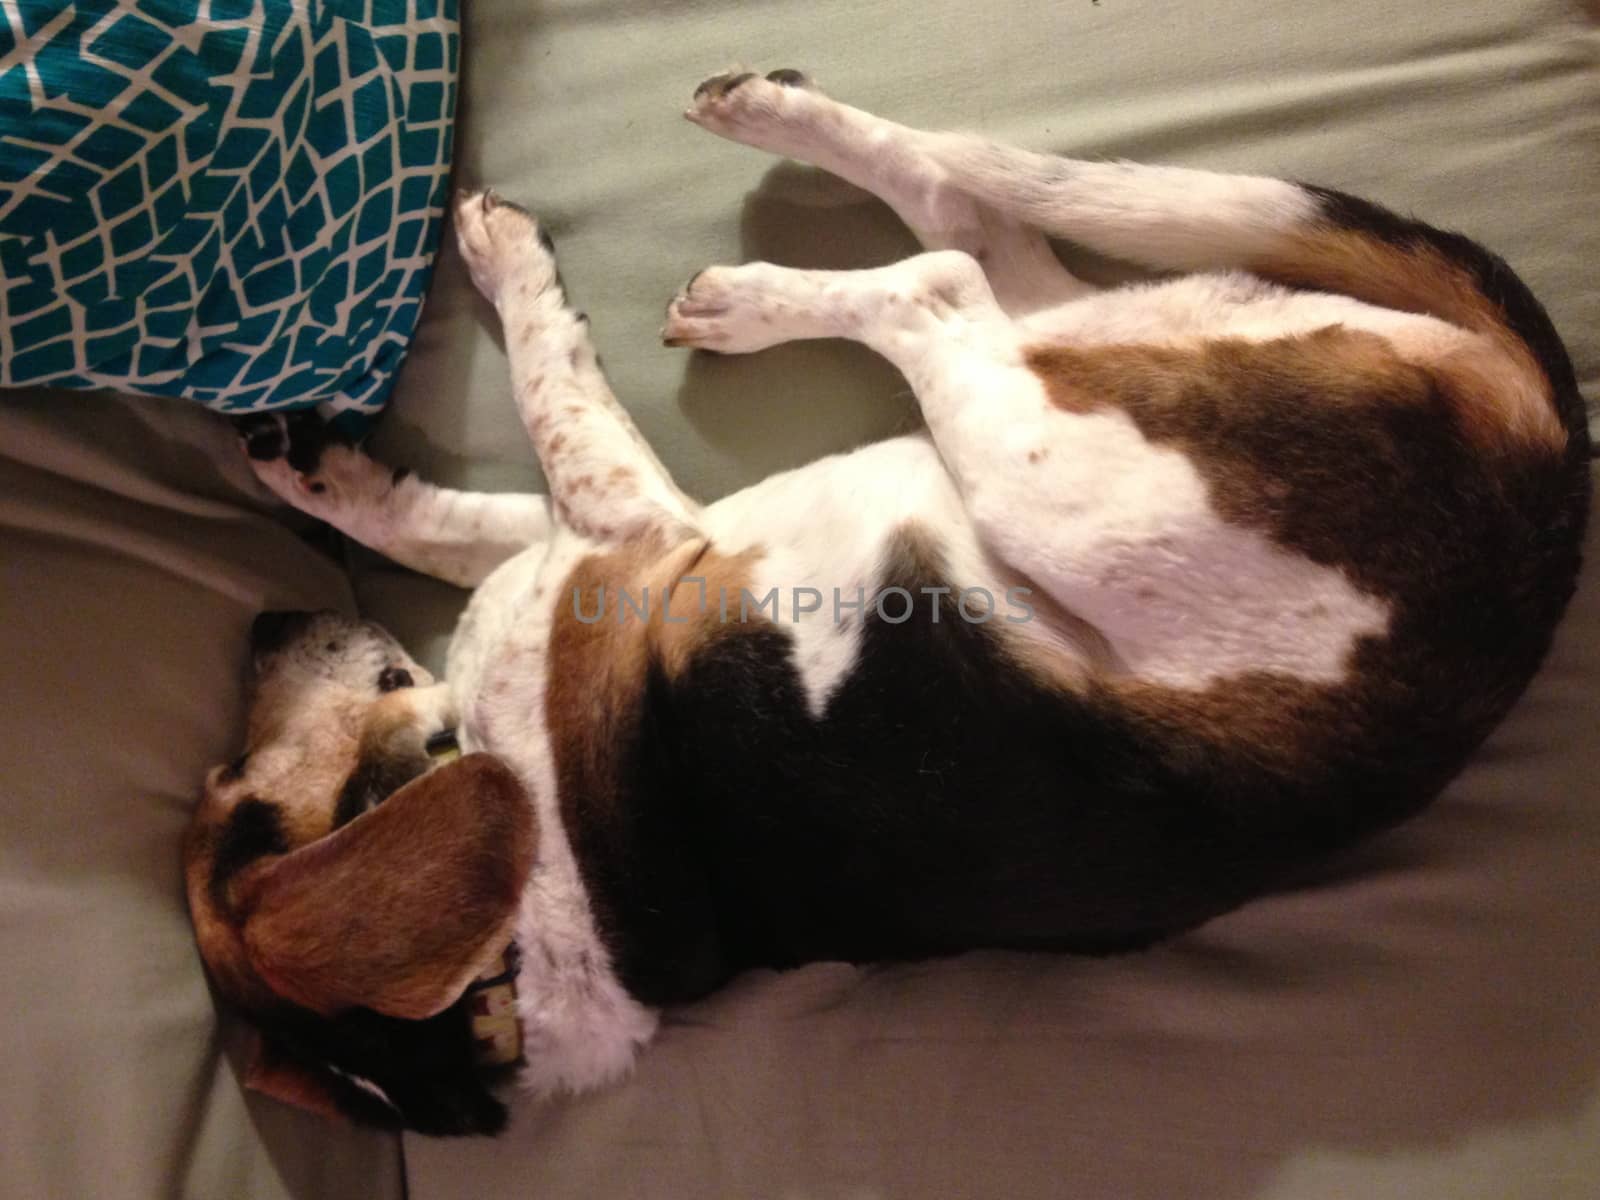 Beagle sleeping profile shot.